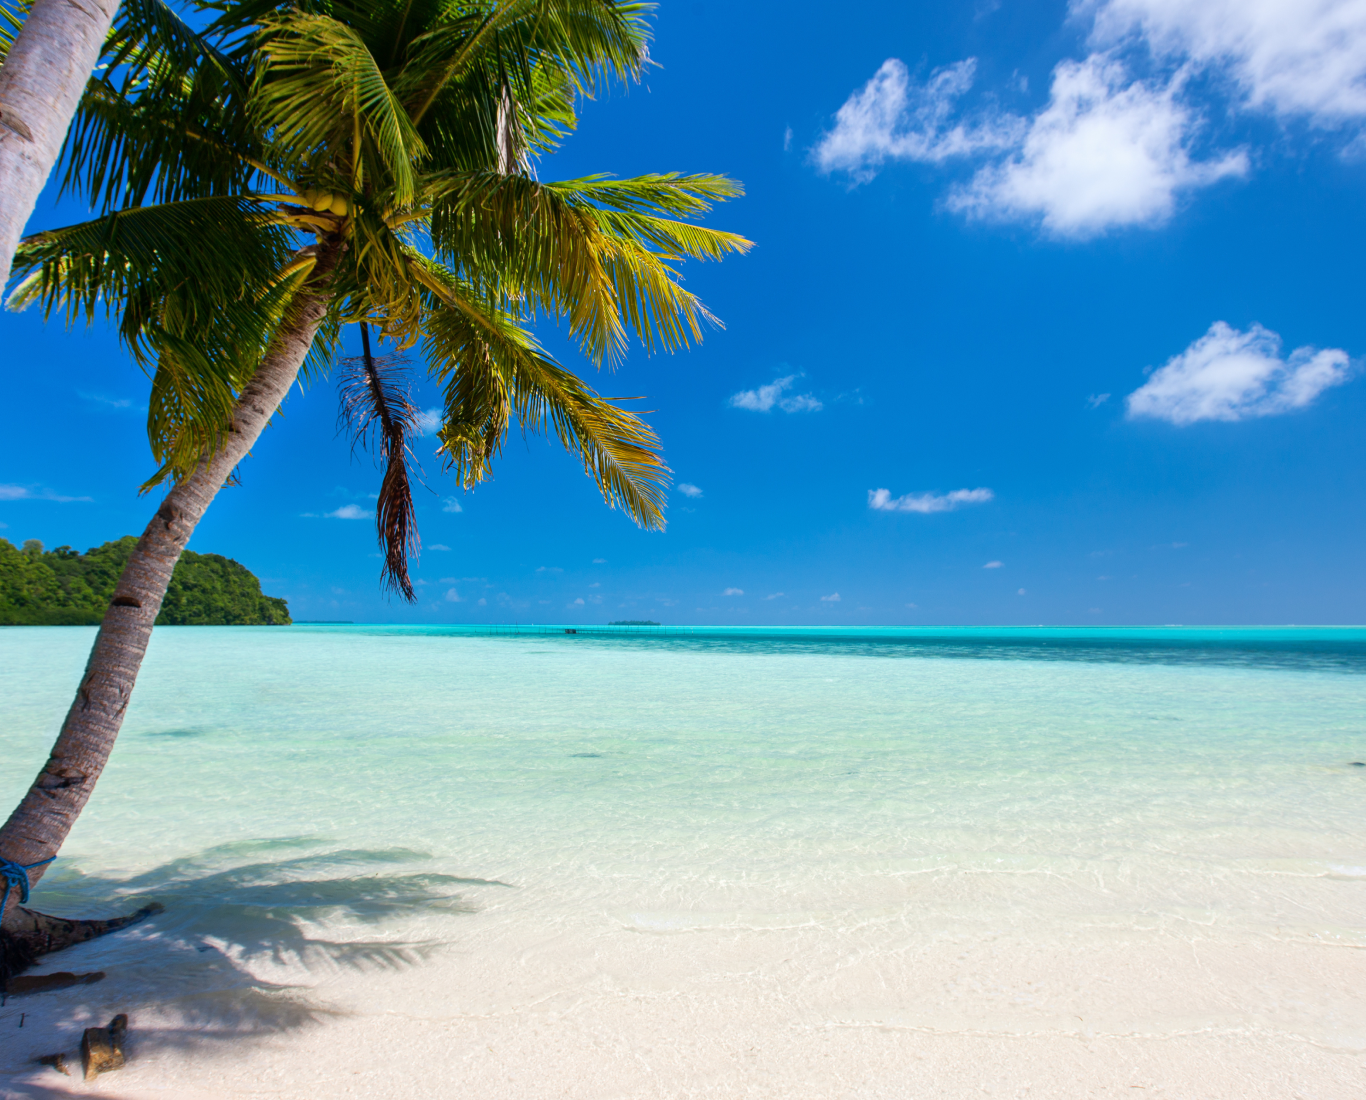 a palm tree overlooking a beach